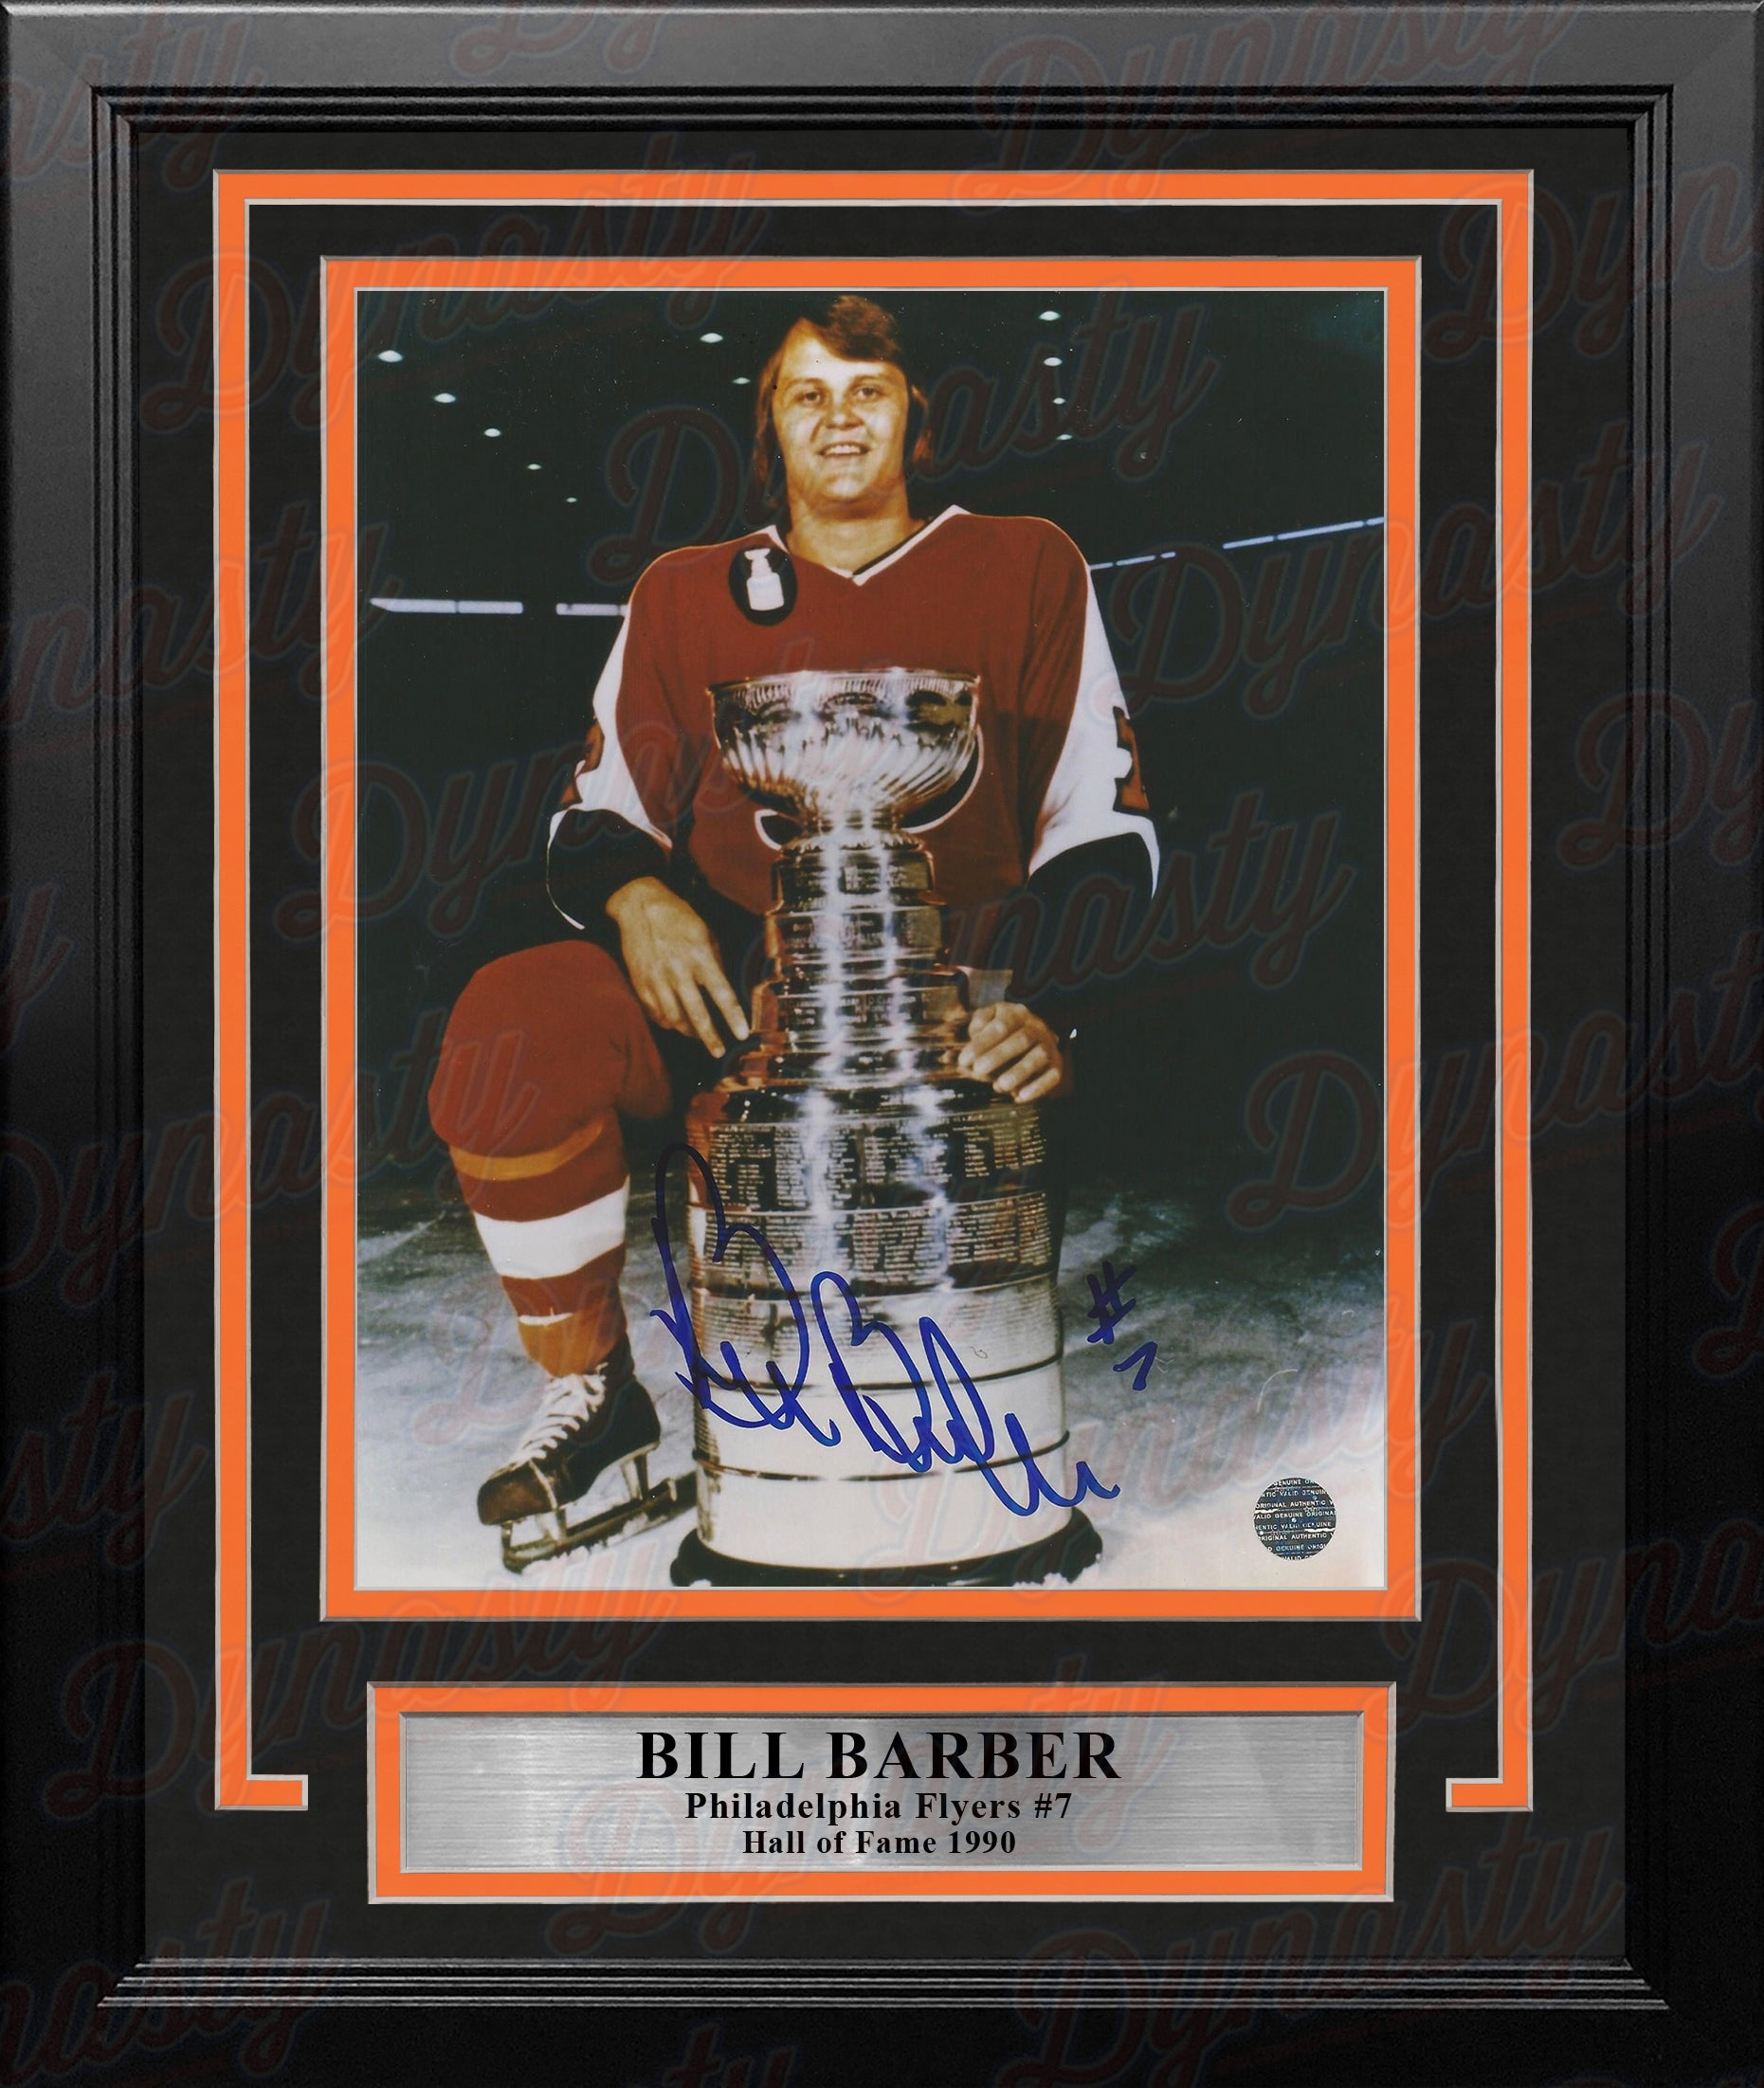 Bill Barber Stanley Cup Autographed Philadelphia Flyers 8" x 10" Framed Hockey Photo - Dynasty Sports & Framing 